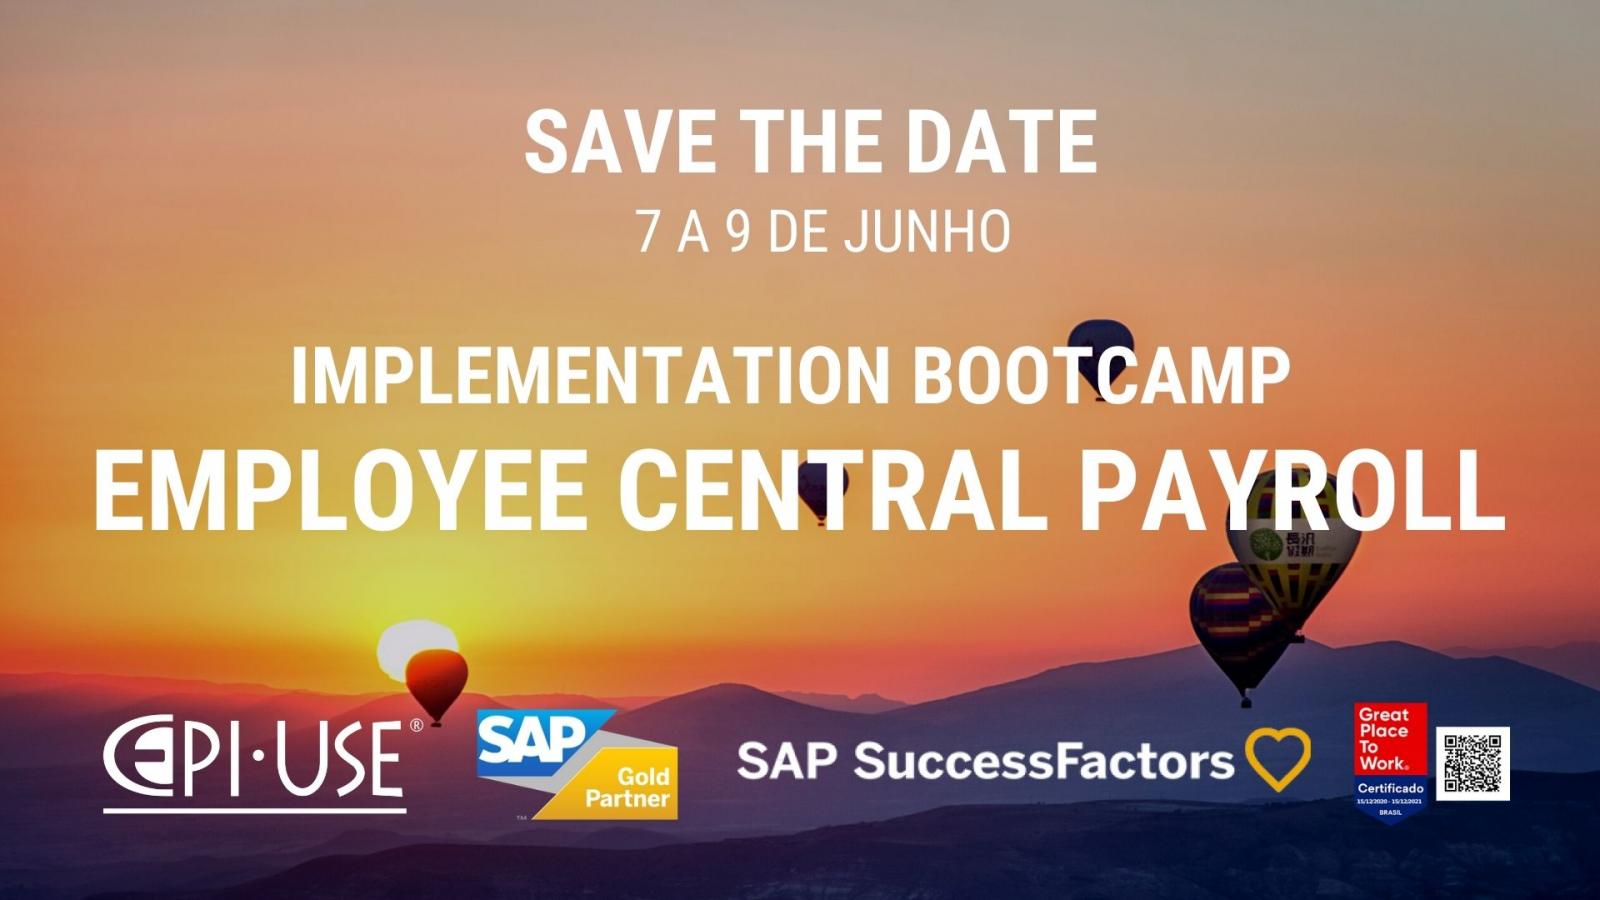 Employee Central Payroll - Implementation Bootcamp em junho 2021